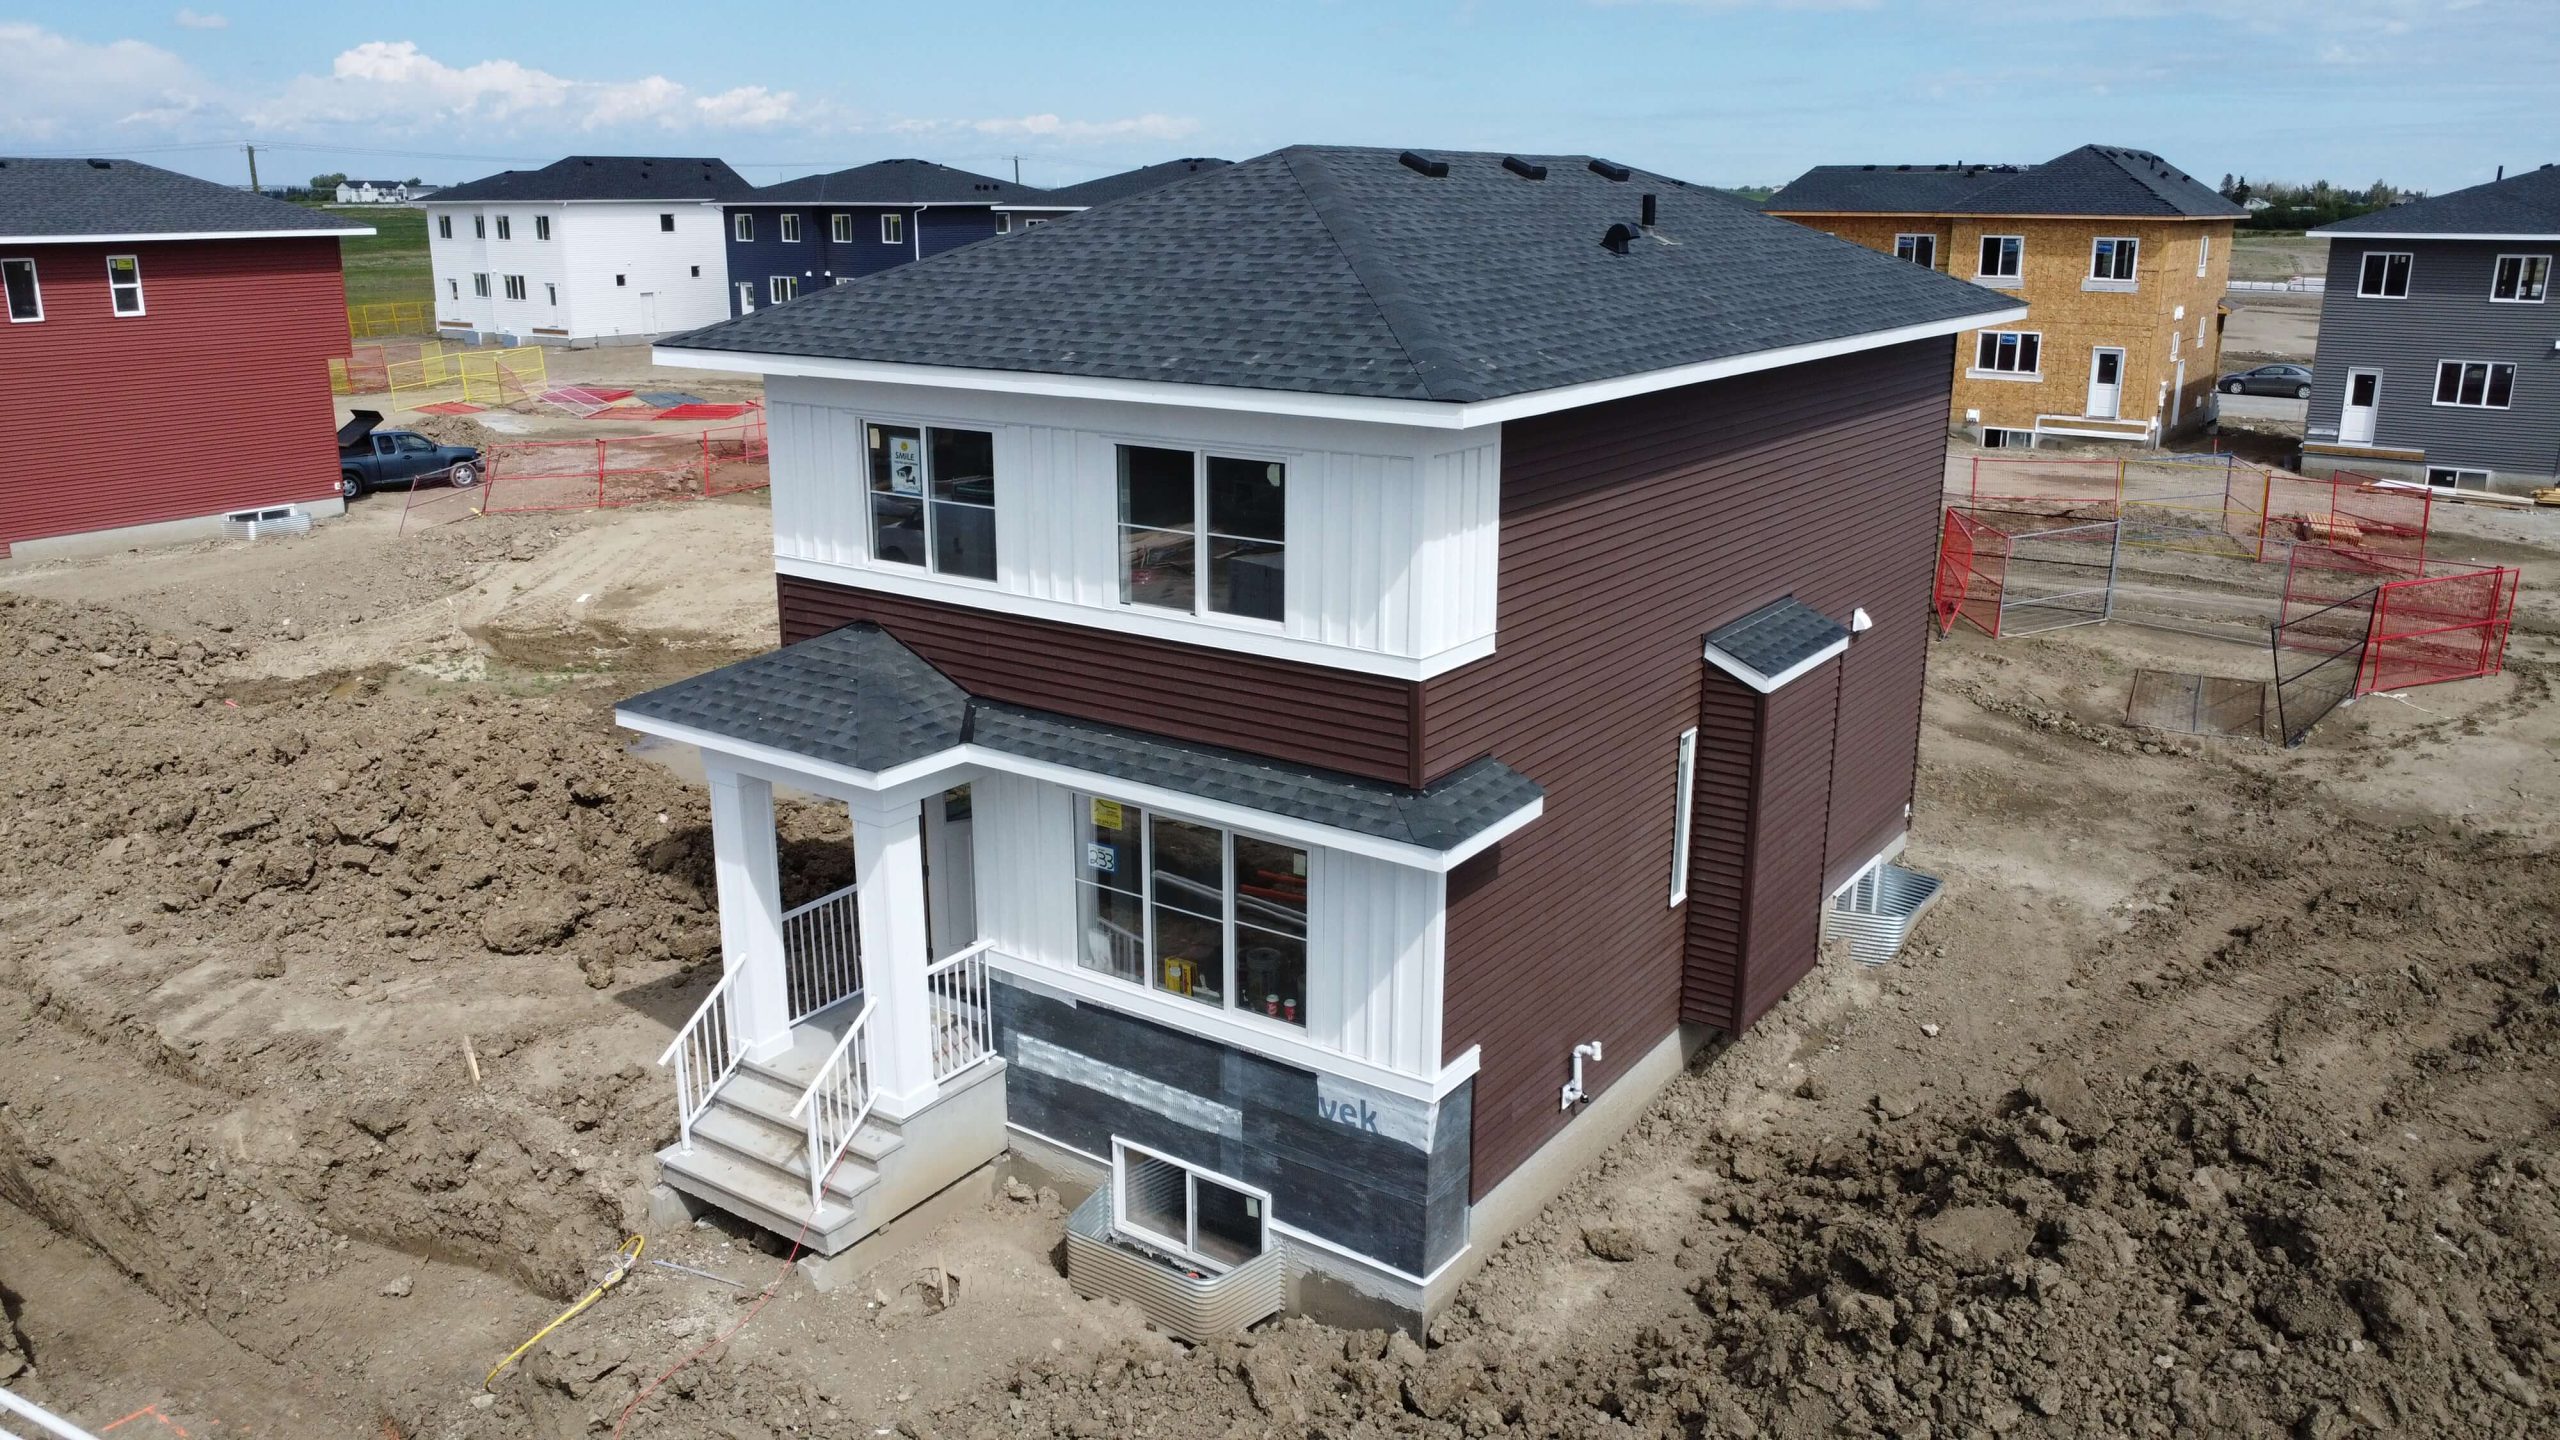 Single Family New Home Construction in Calgary